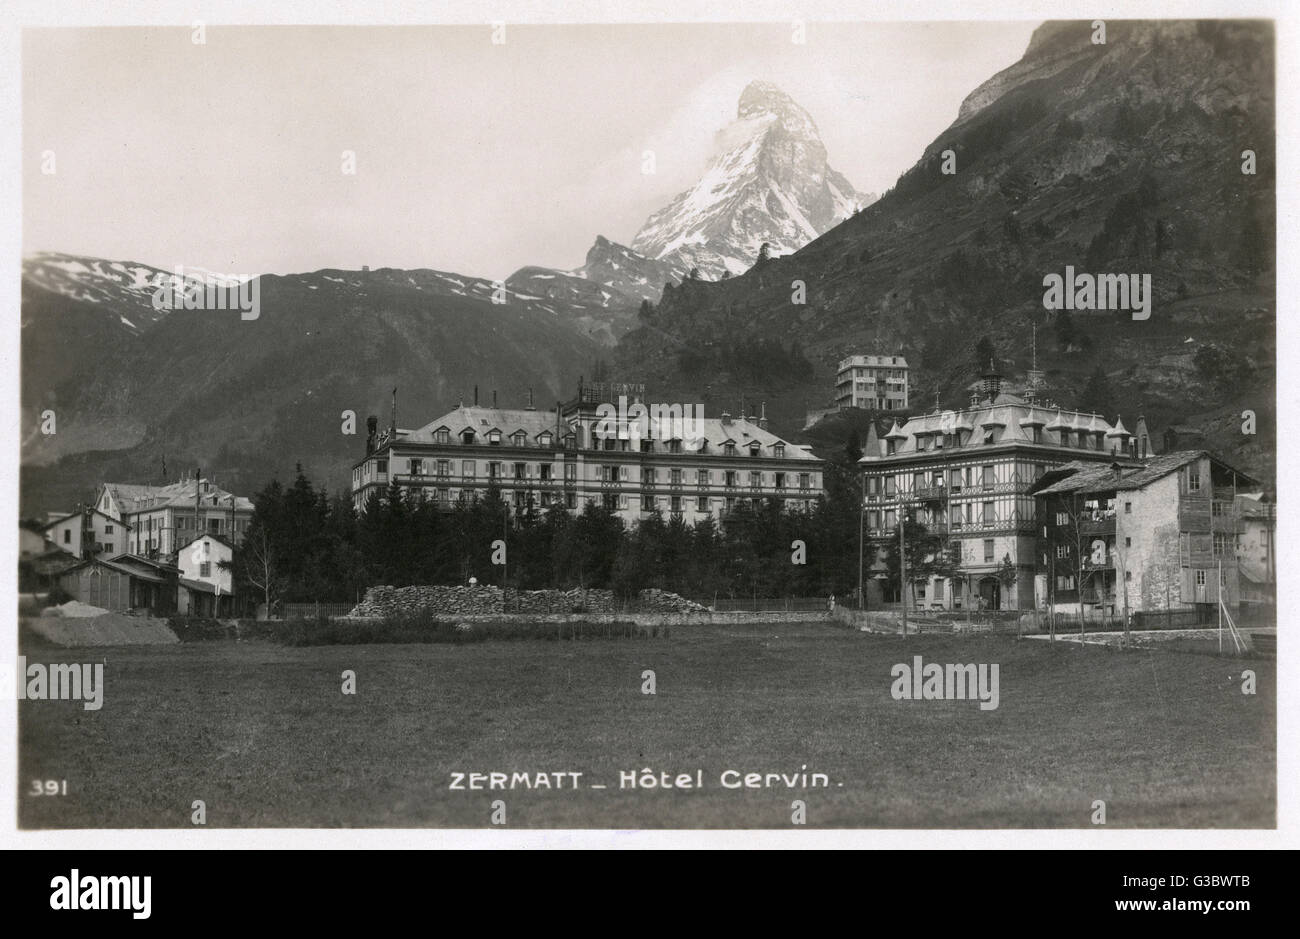 Zermatt - Hotel Cervin - Cervino visibile in background Data: 1920s Foto Stock